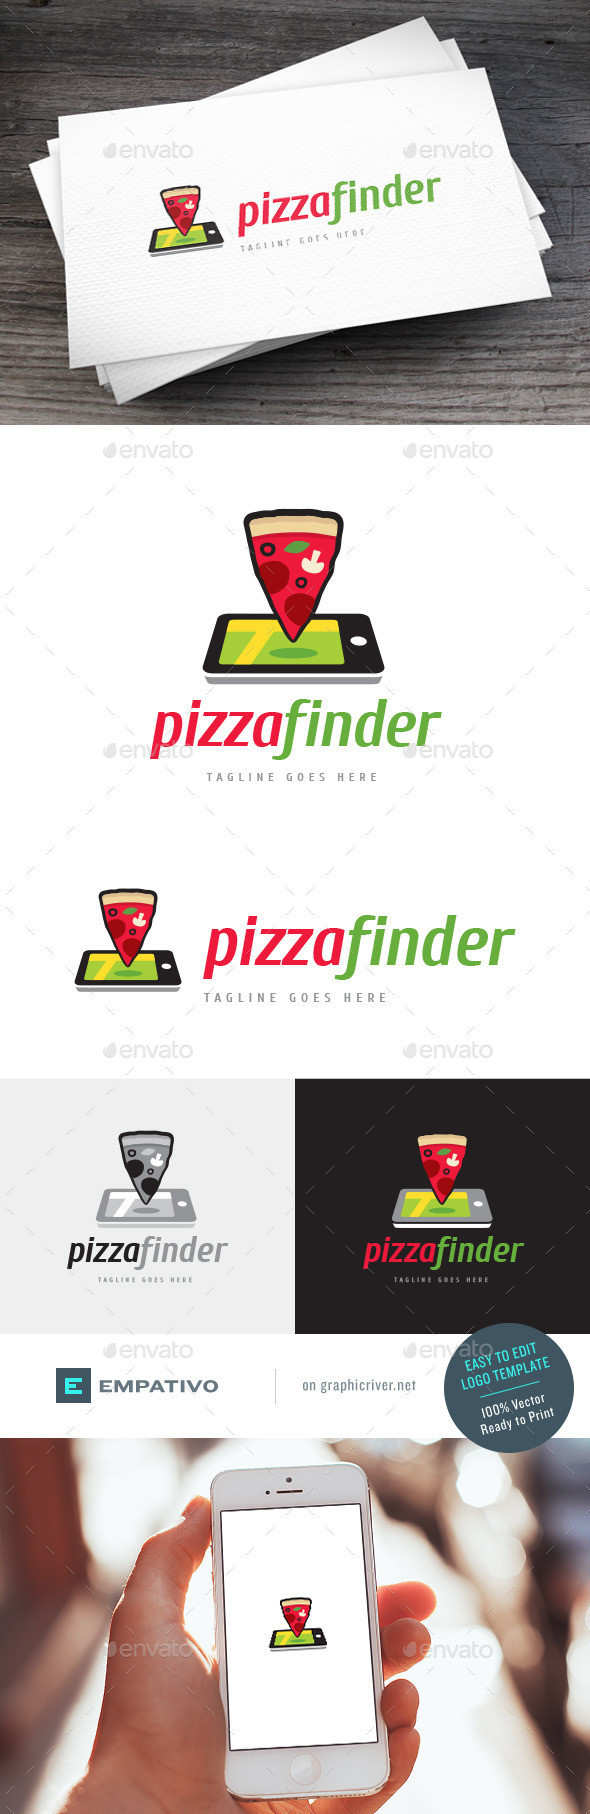 Pizza finder logo template